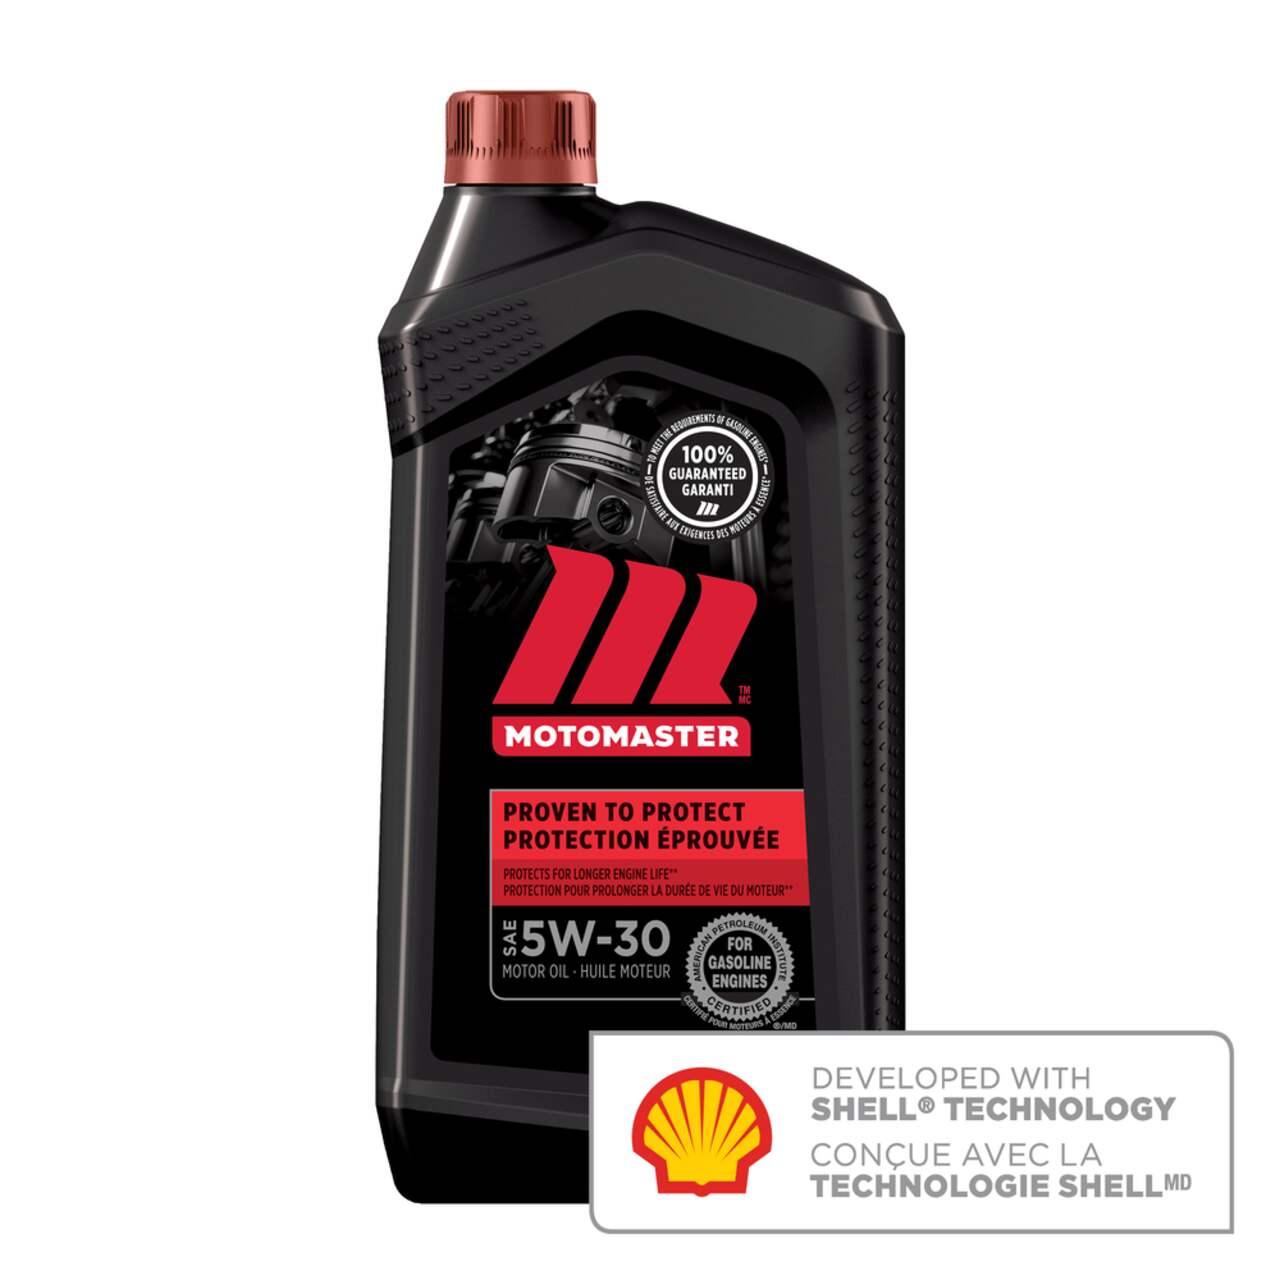 Professional-Series 5W30 Motor Oil